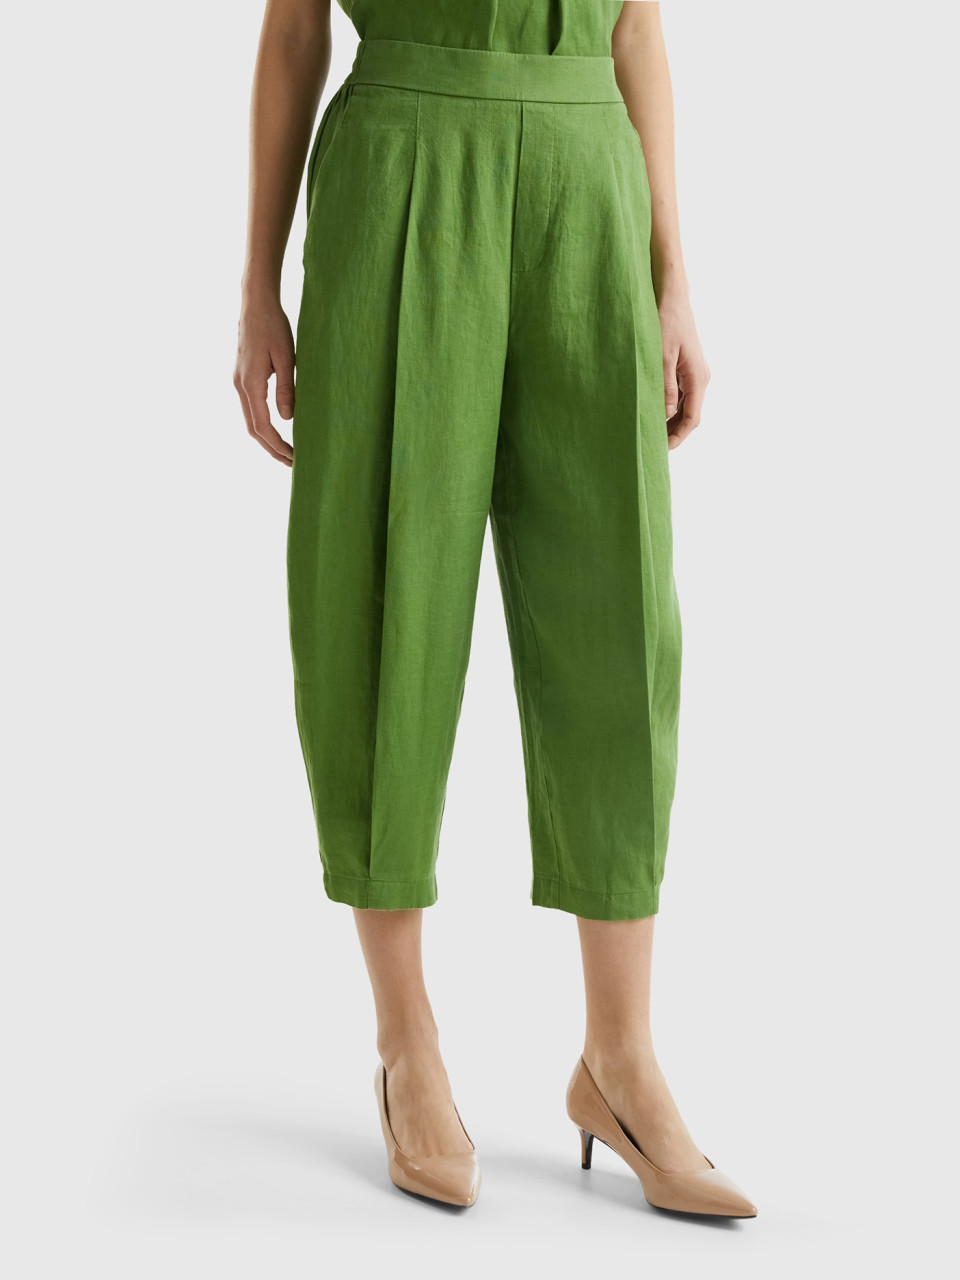 Benetton, Trousers In Pure Linen, Military Green, Women